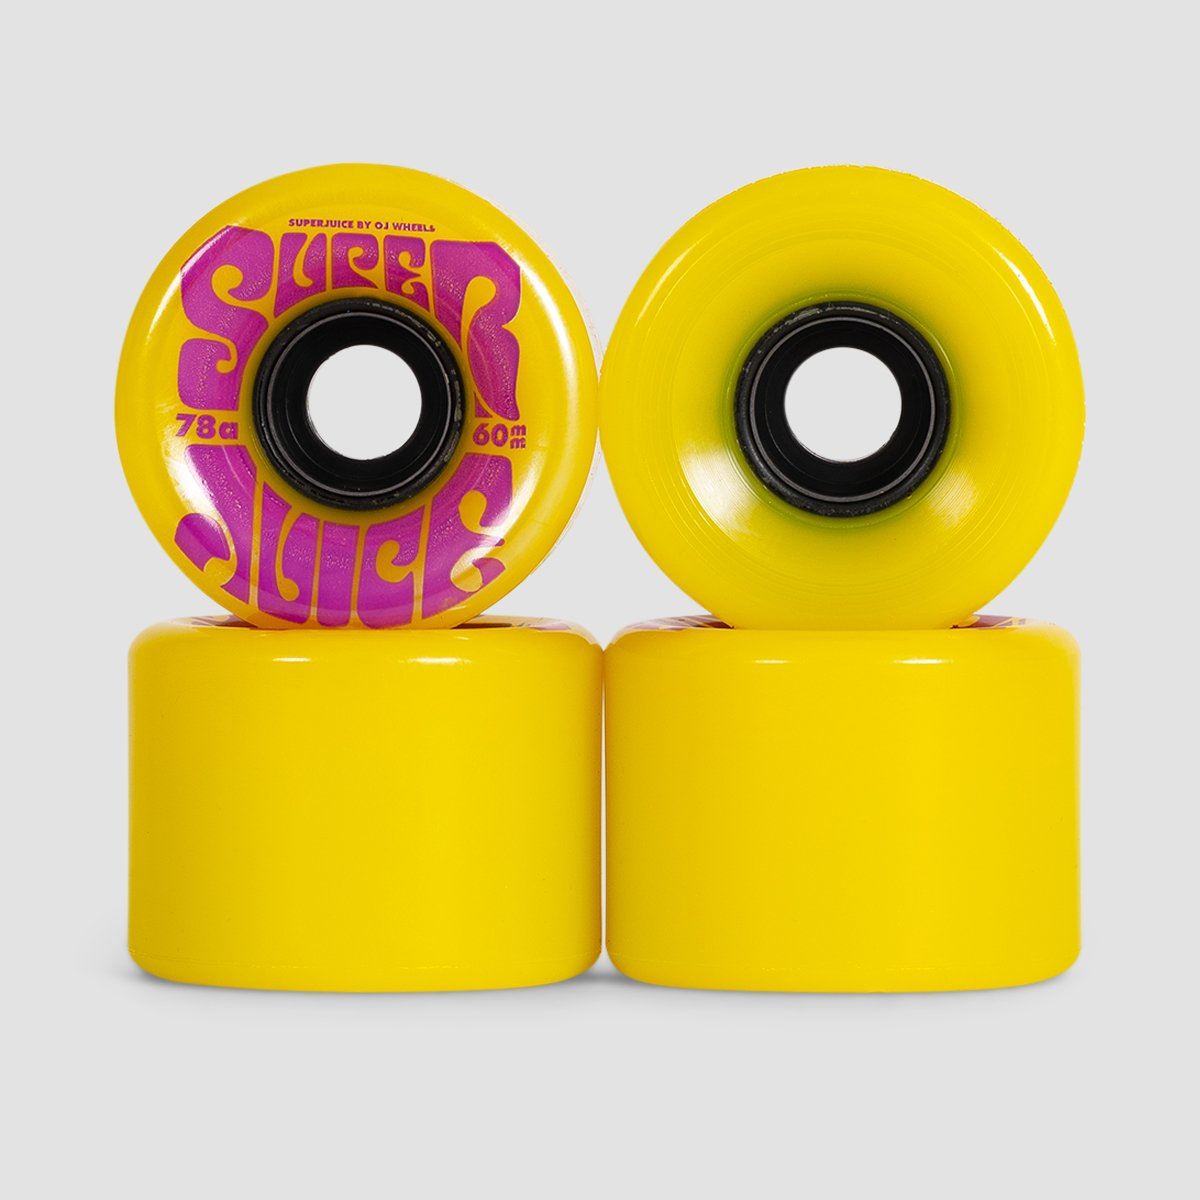 OJ Super Juice 78a Soft Skateboard Wheels Yellow 60mm